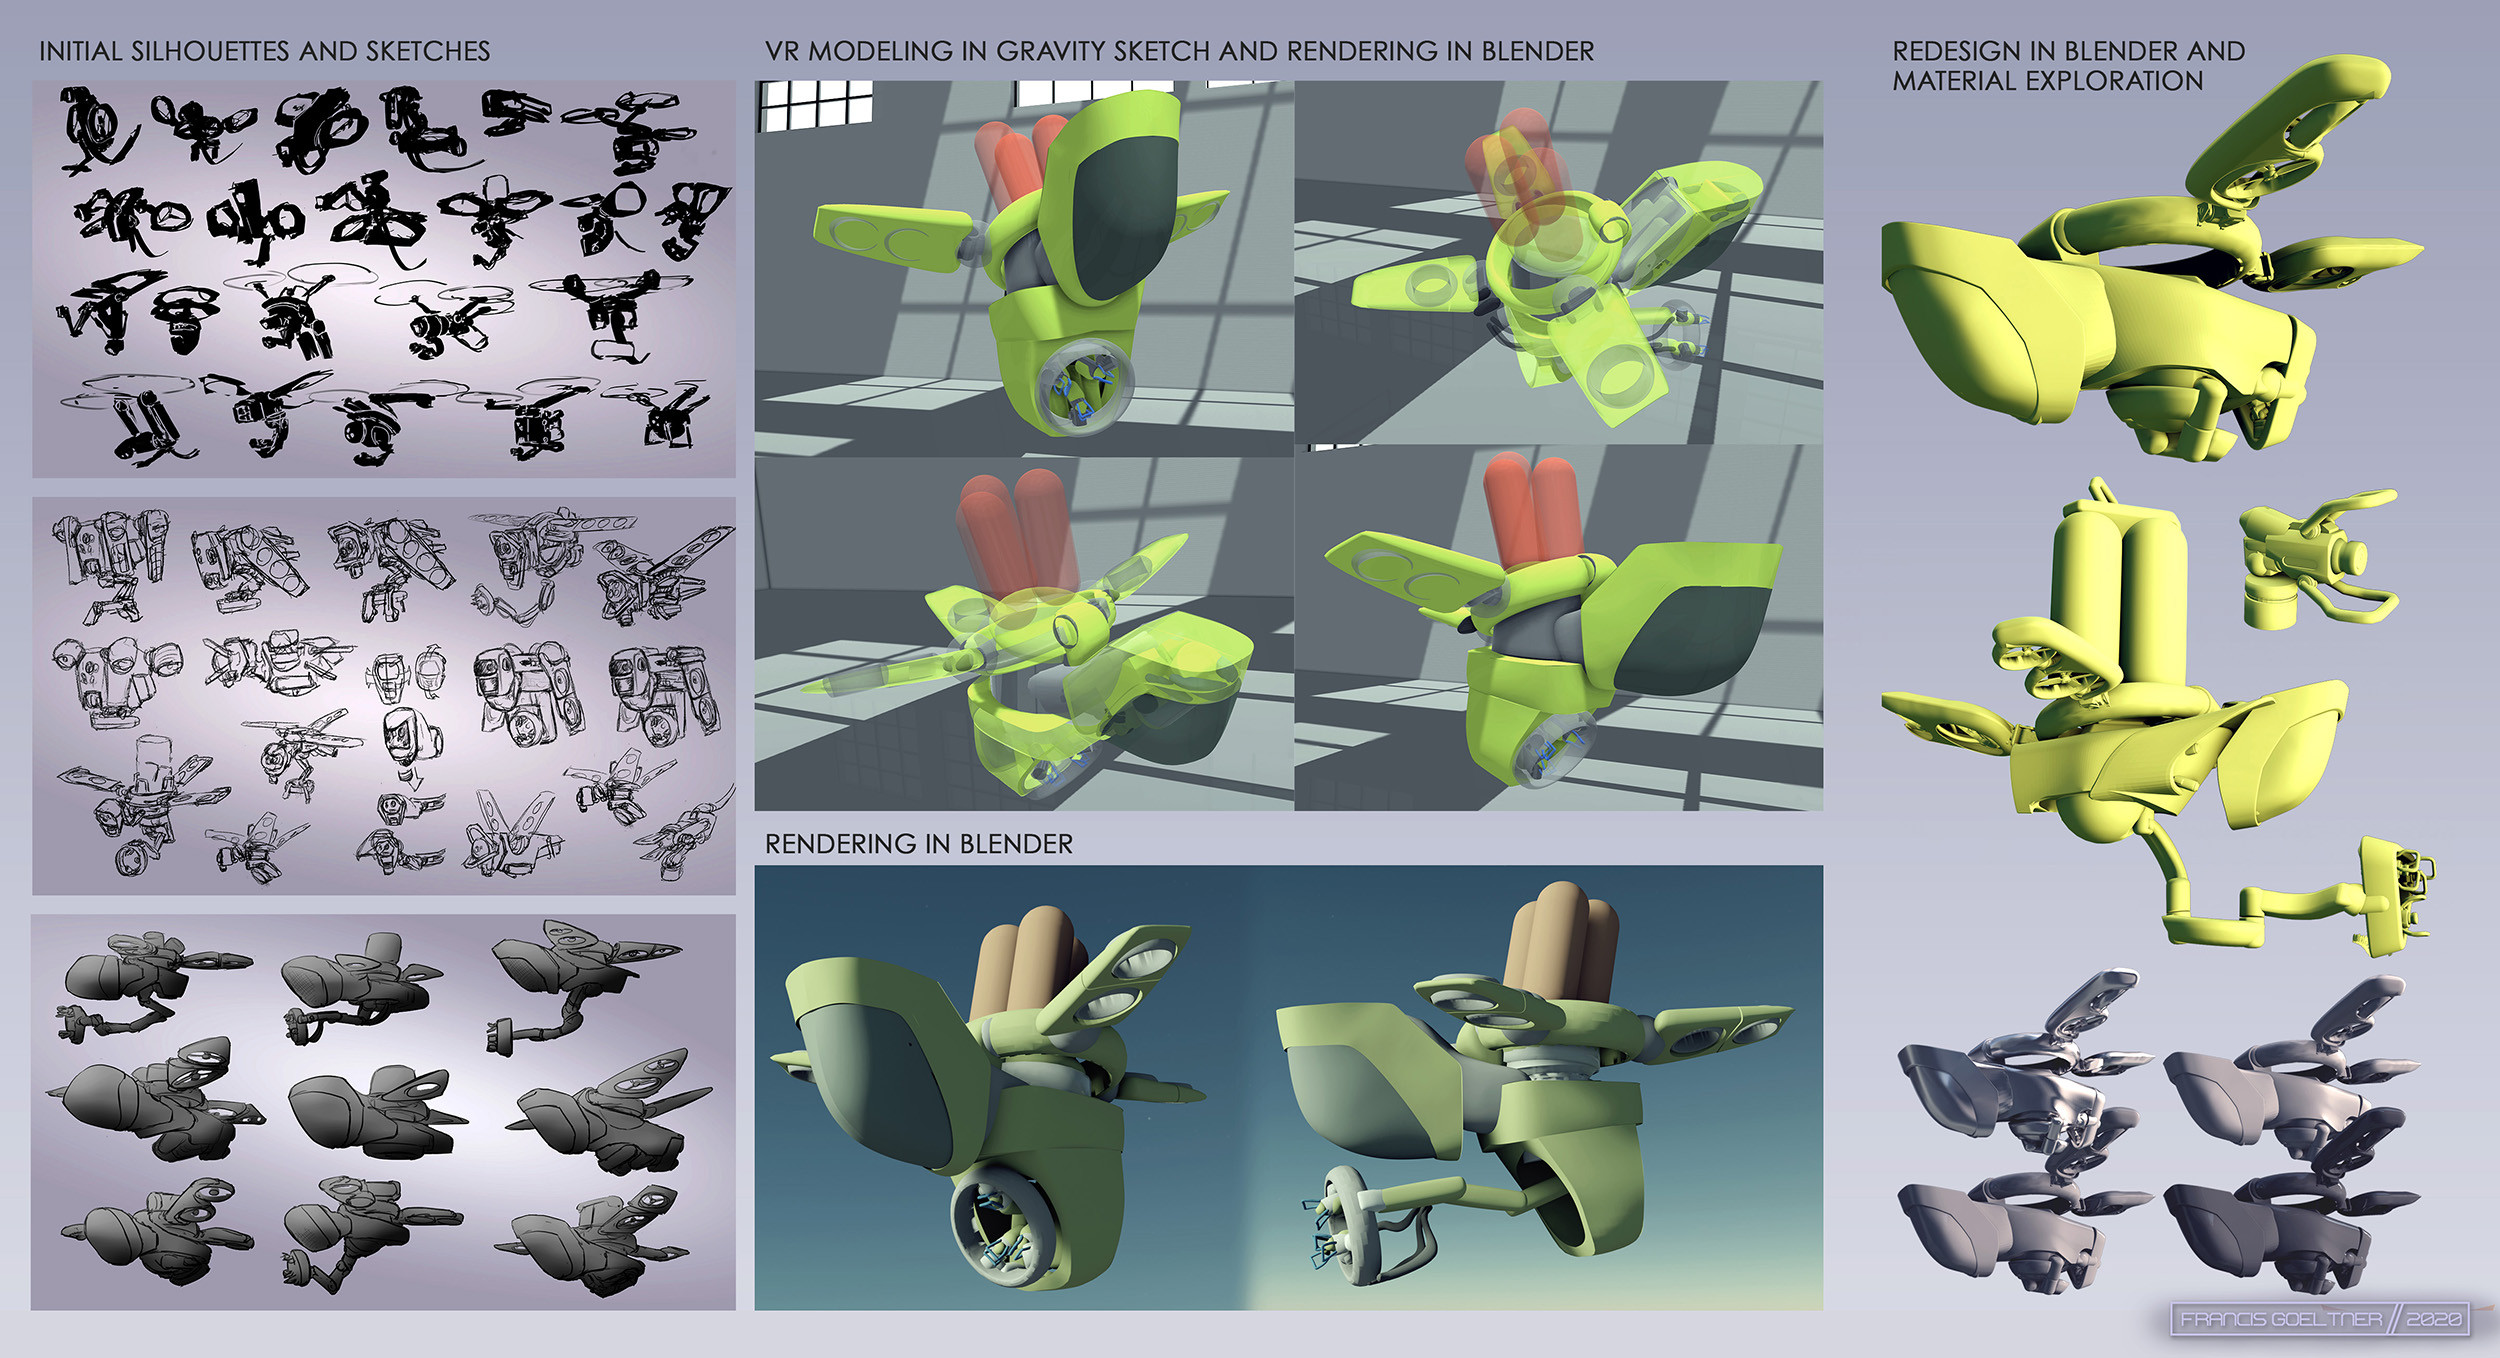 Initial development stages: Ideation sketches, Gravity Sketch model, Blender renders, refined design in Blender, material renders